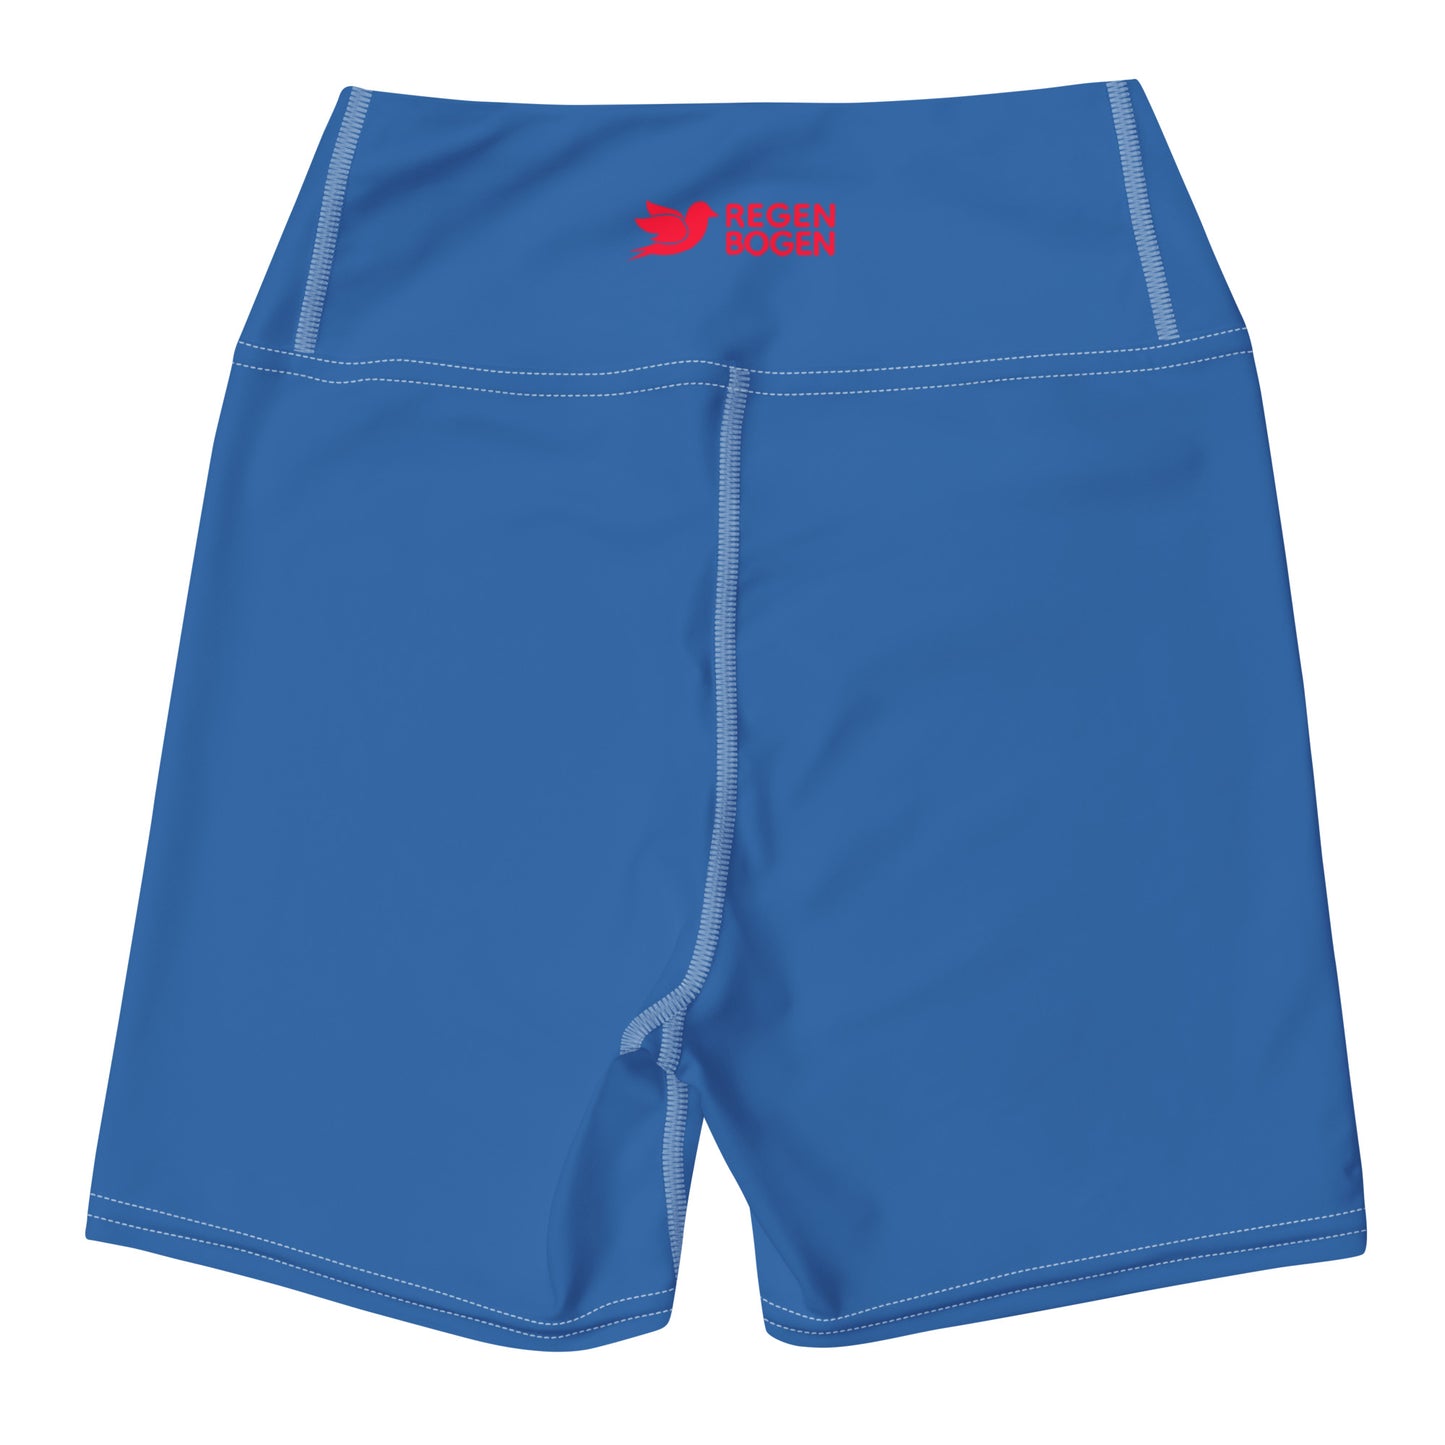 Alpen Tag Solid Blue High Waist Yoga Shorts / Bike Shorts with Inside Pocket